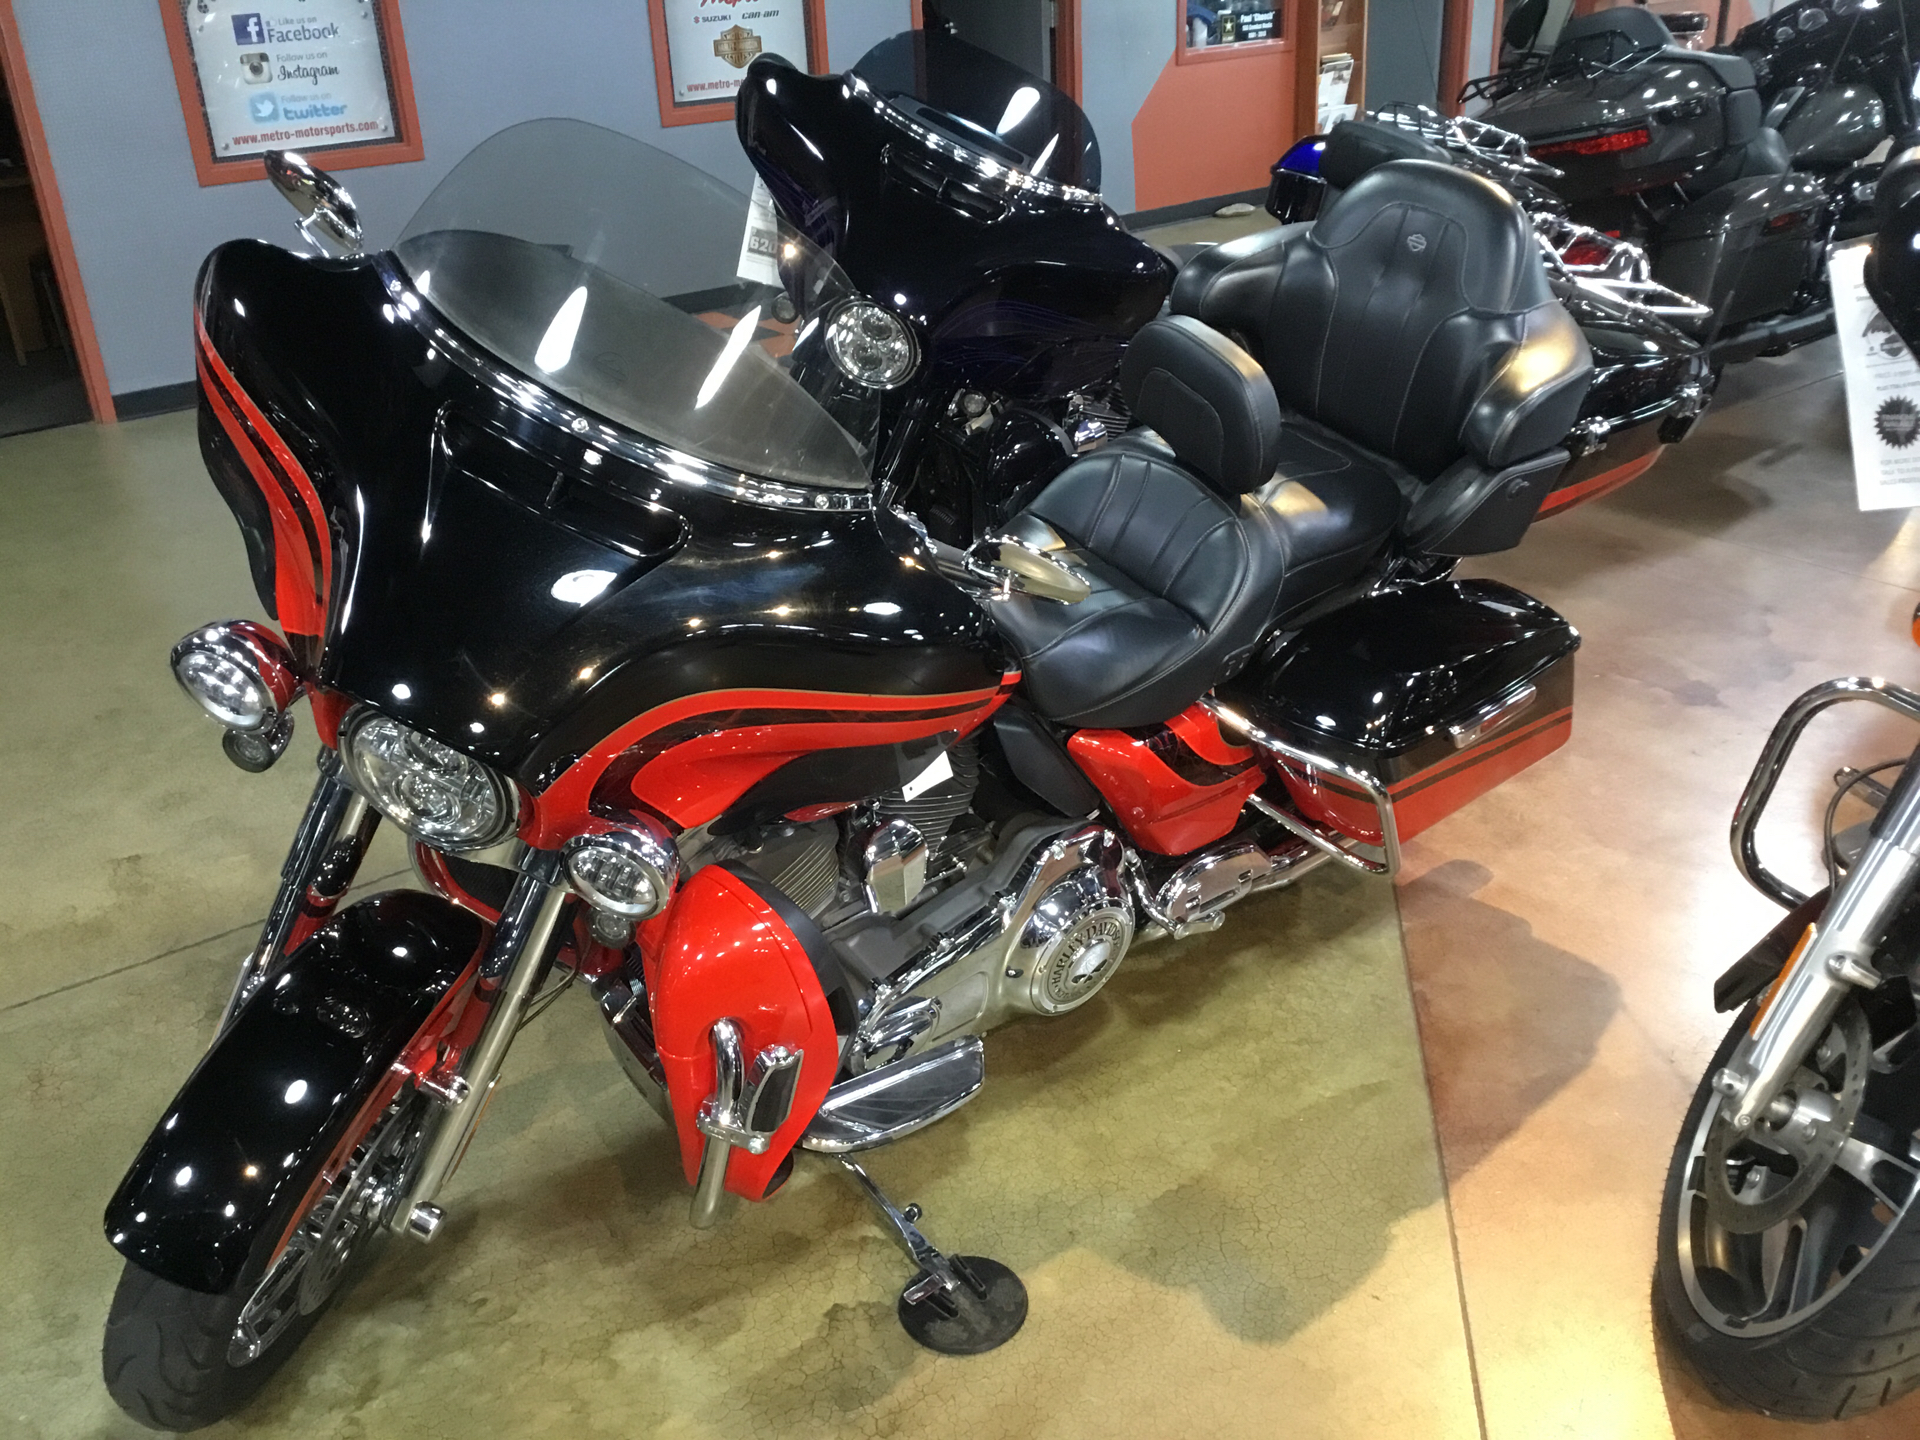 2016 Harley-Davidson CVO™ Limited in Cedar Rapids, Iowa - Photo 4